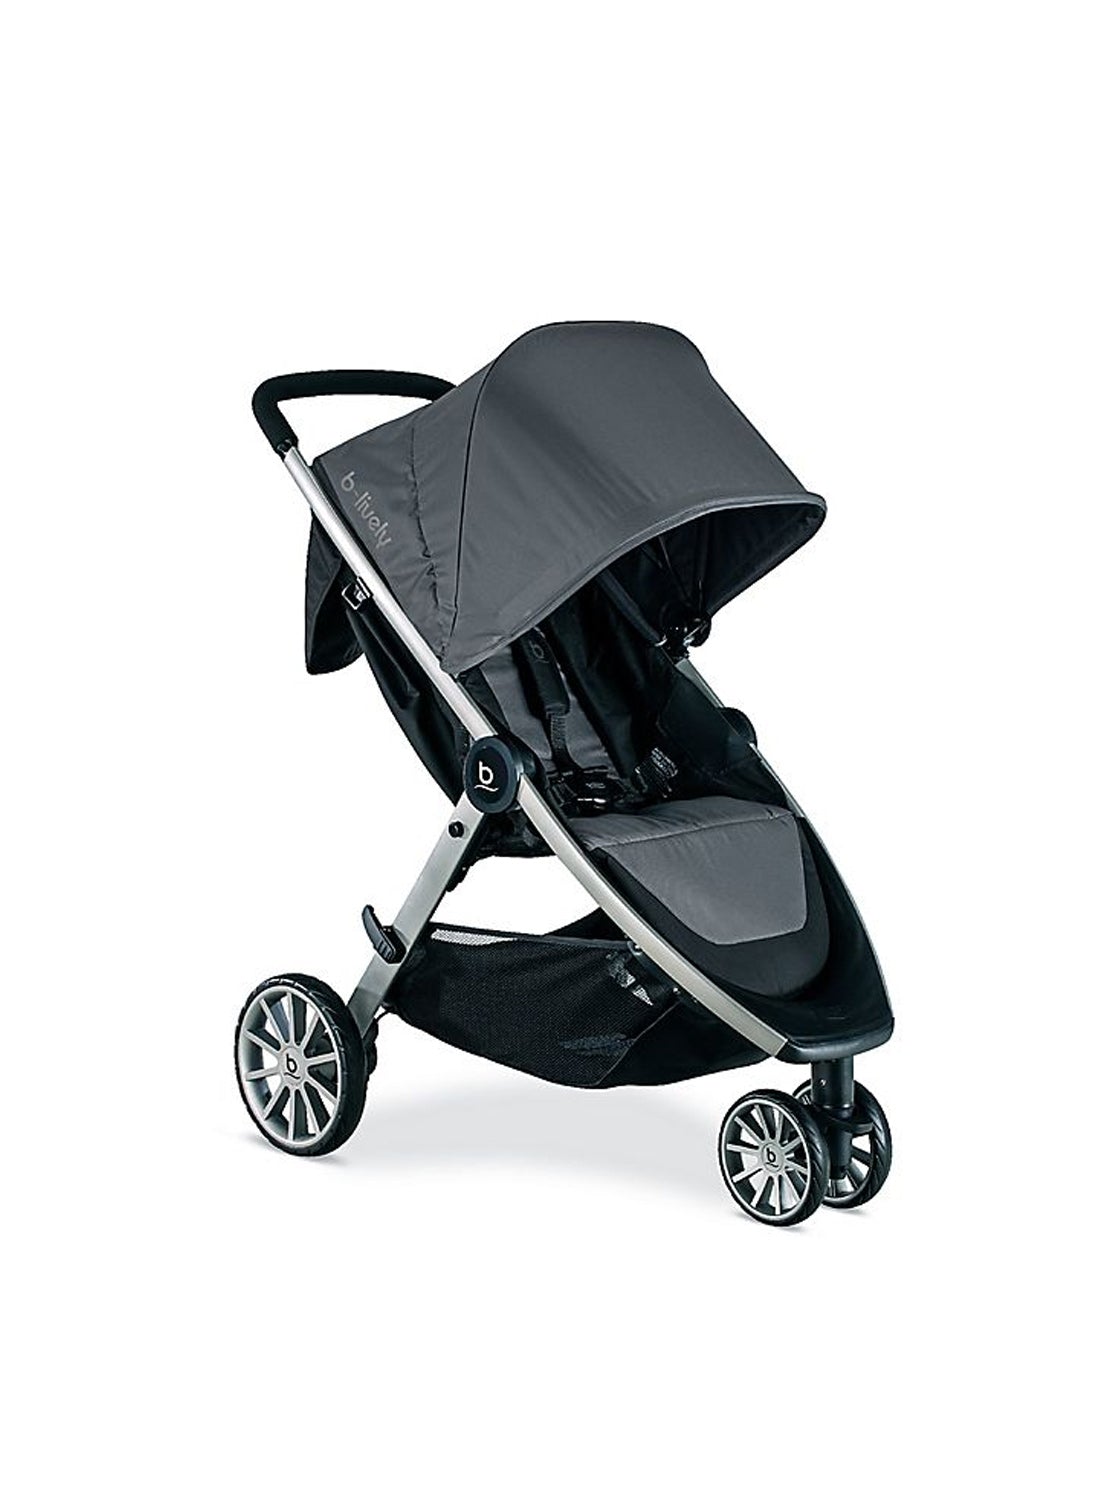 BRITAX B-Lively Lightweight Stroller - ANB Baby -$100 - $300